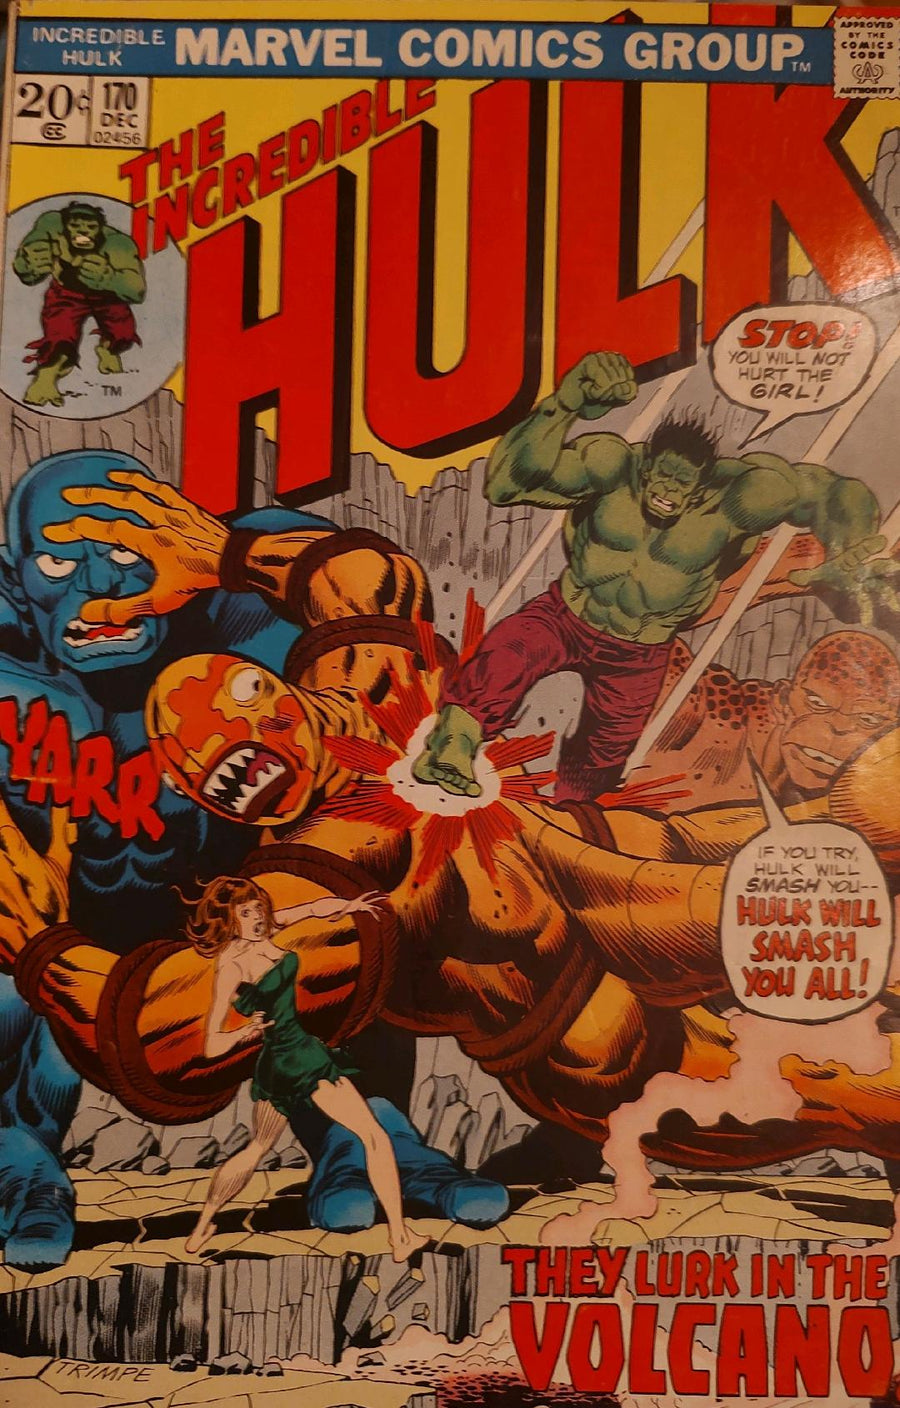 The Incredible Hulk #170 Comic Book Cover